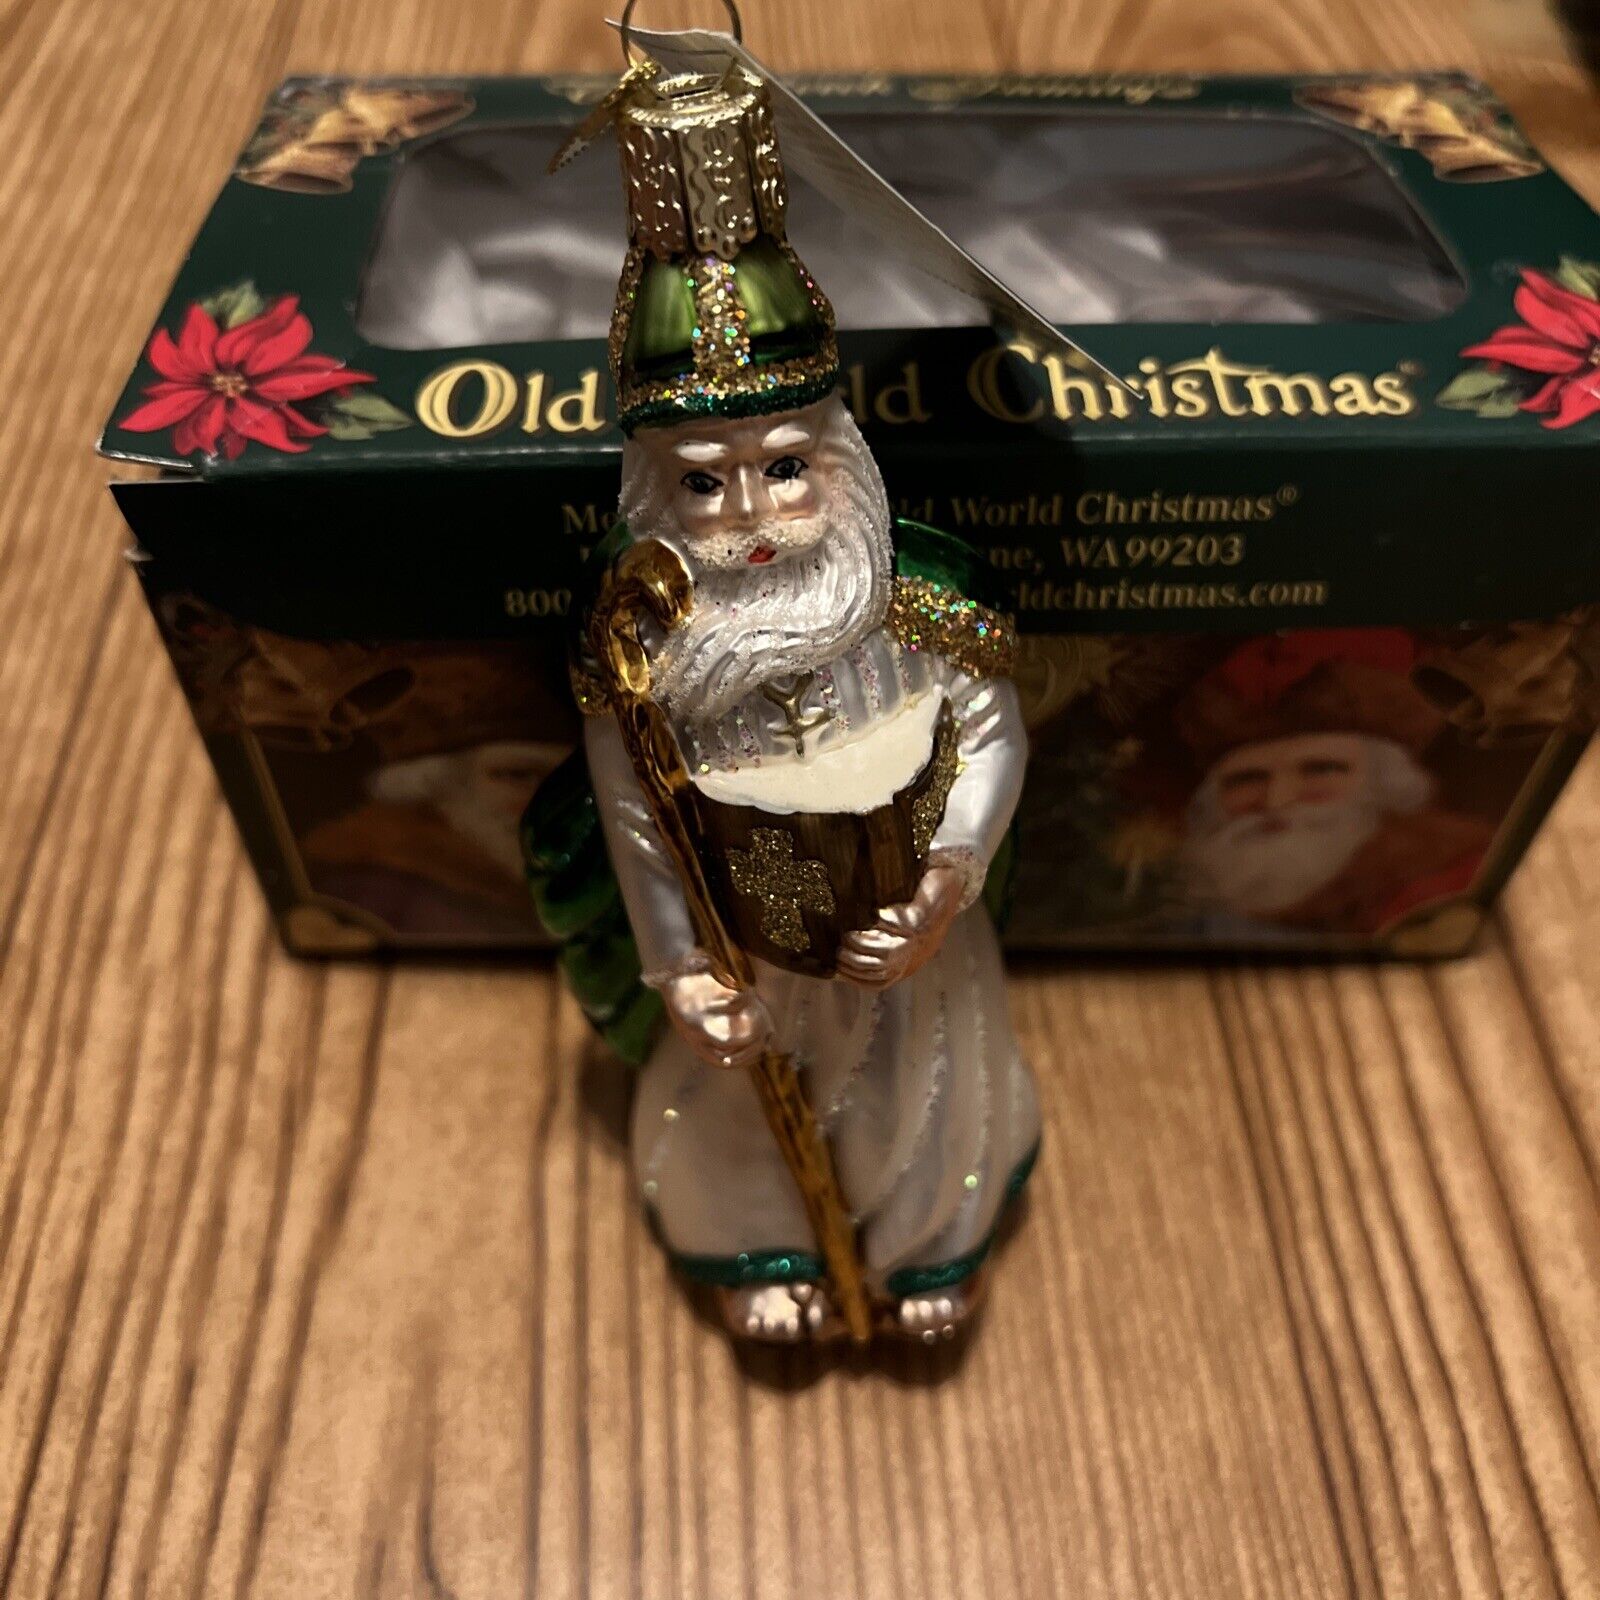 Merck Family’s Old World Christmas Ornament 2003 St. Patrick